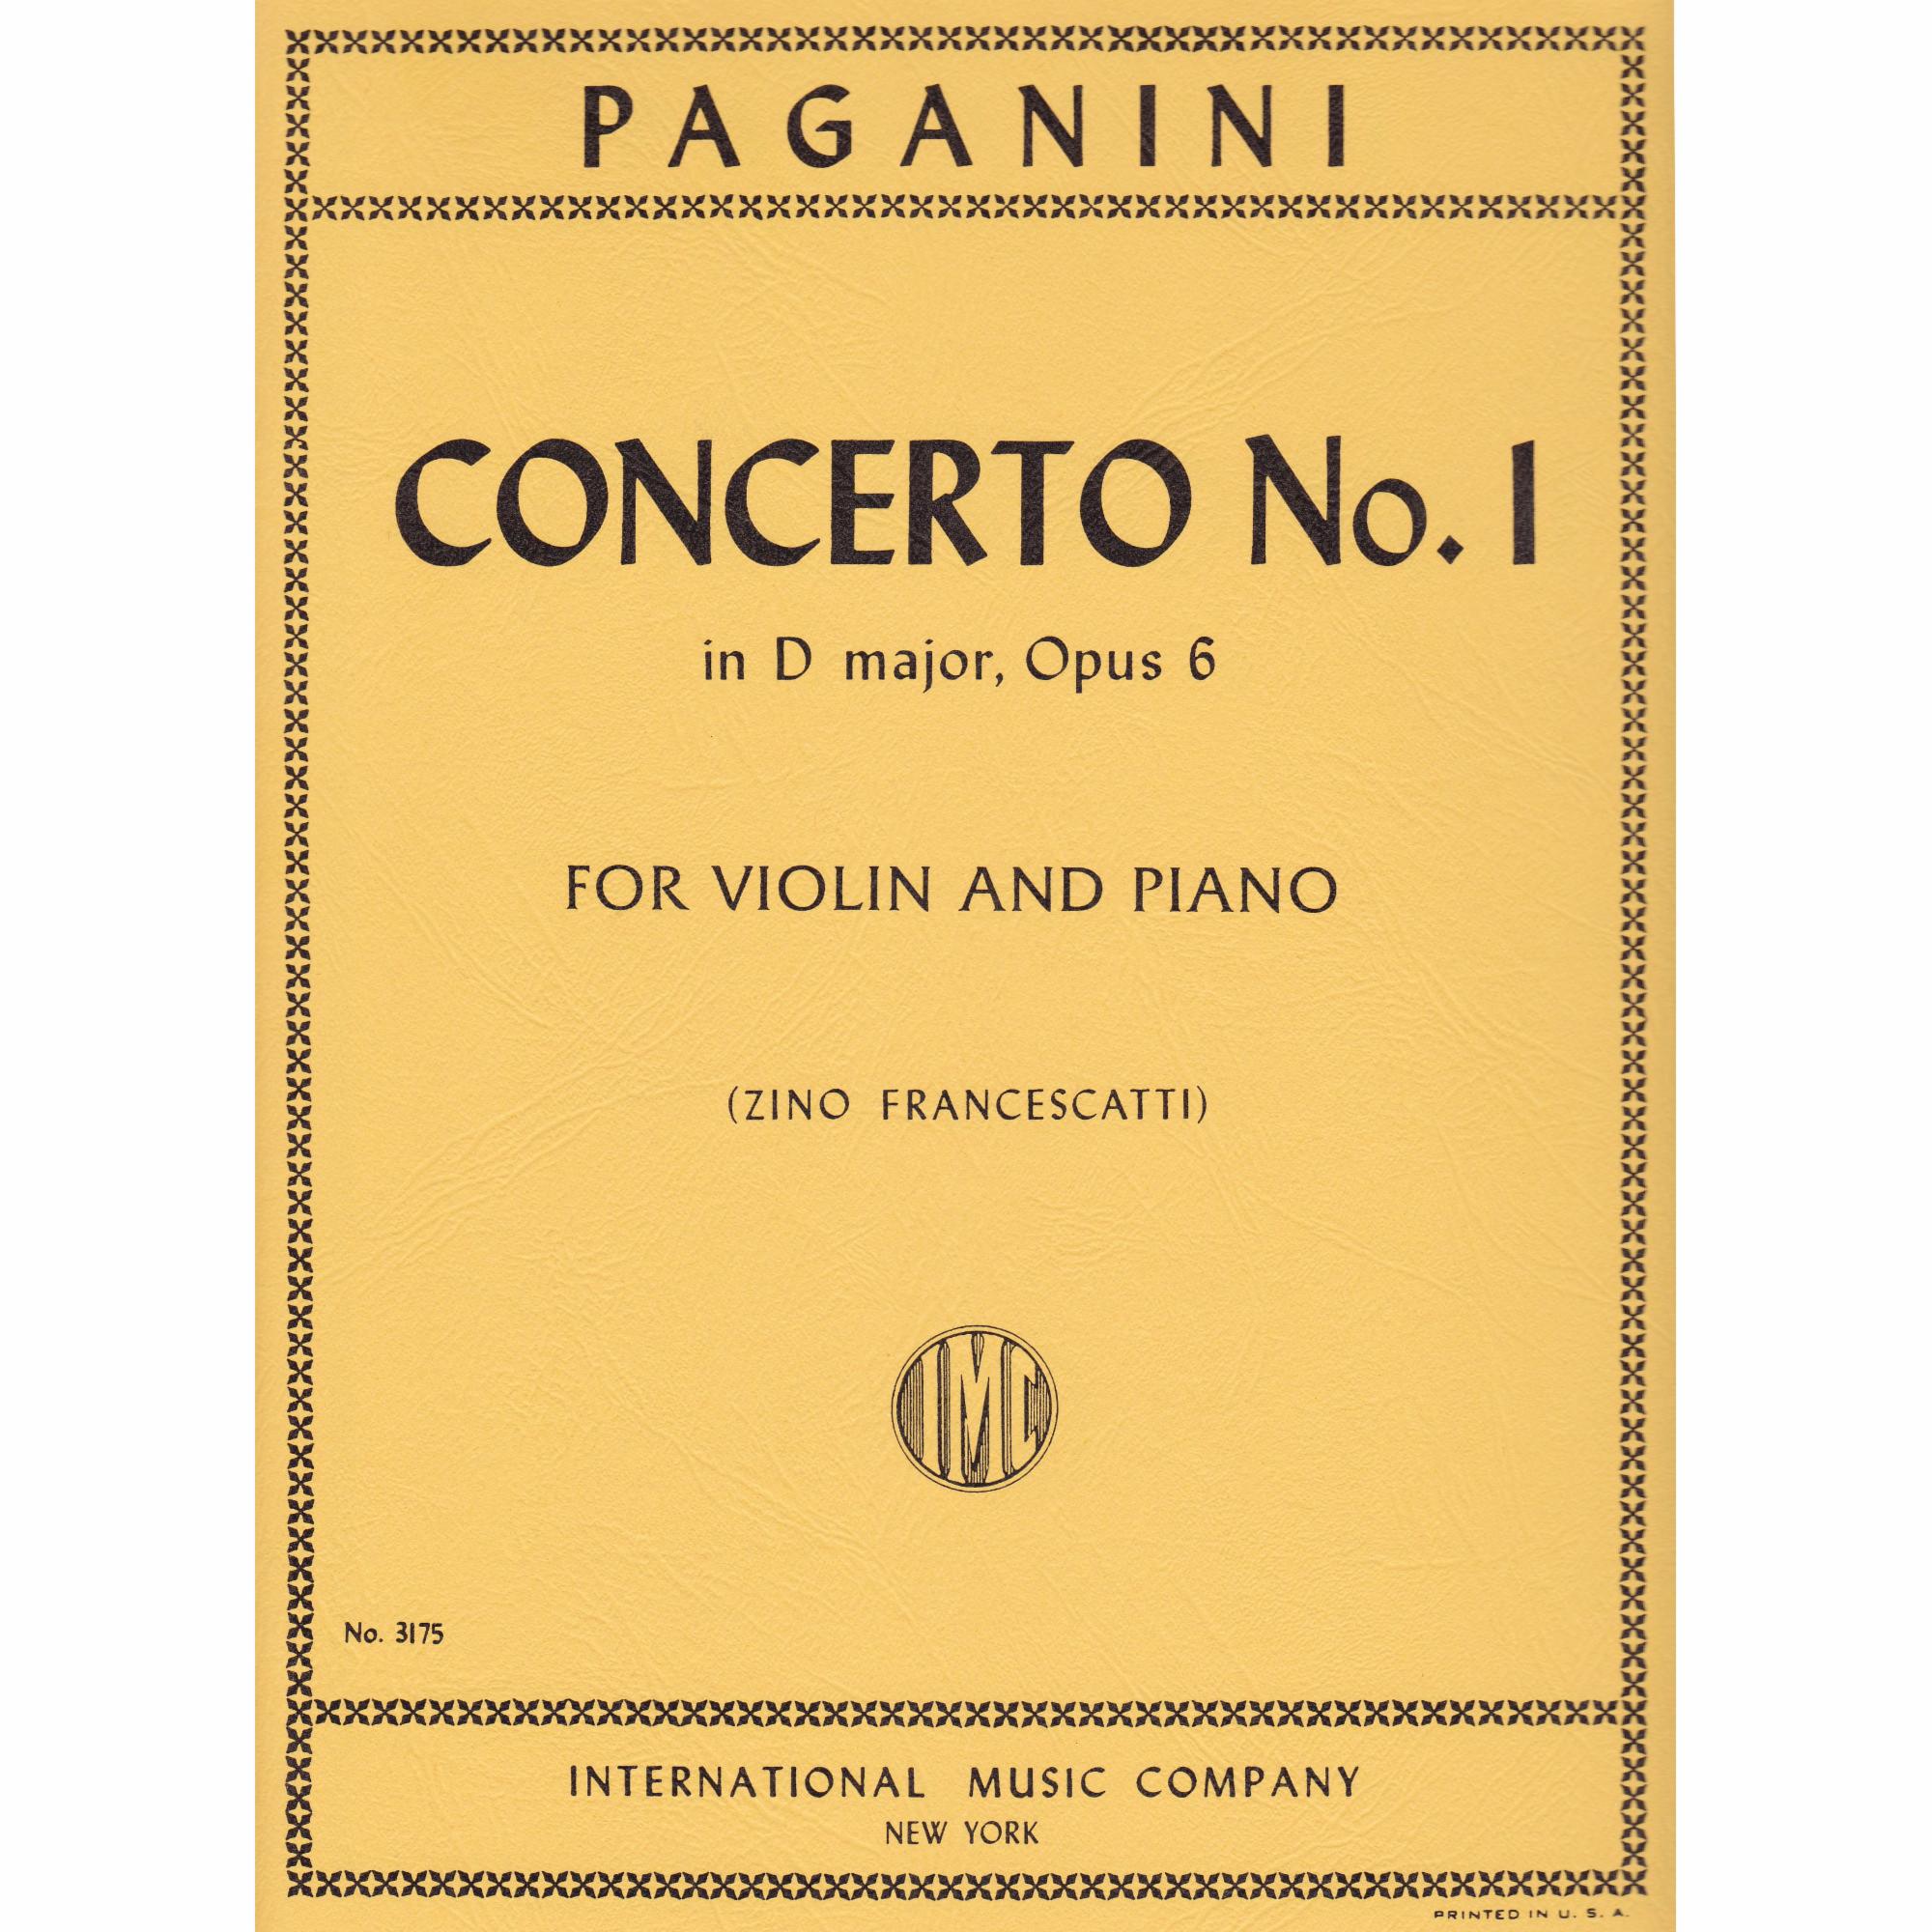 Paganini -- Concerto No. 1 in D Major, Op. 6 for Violin and Piano